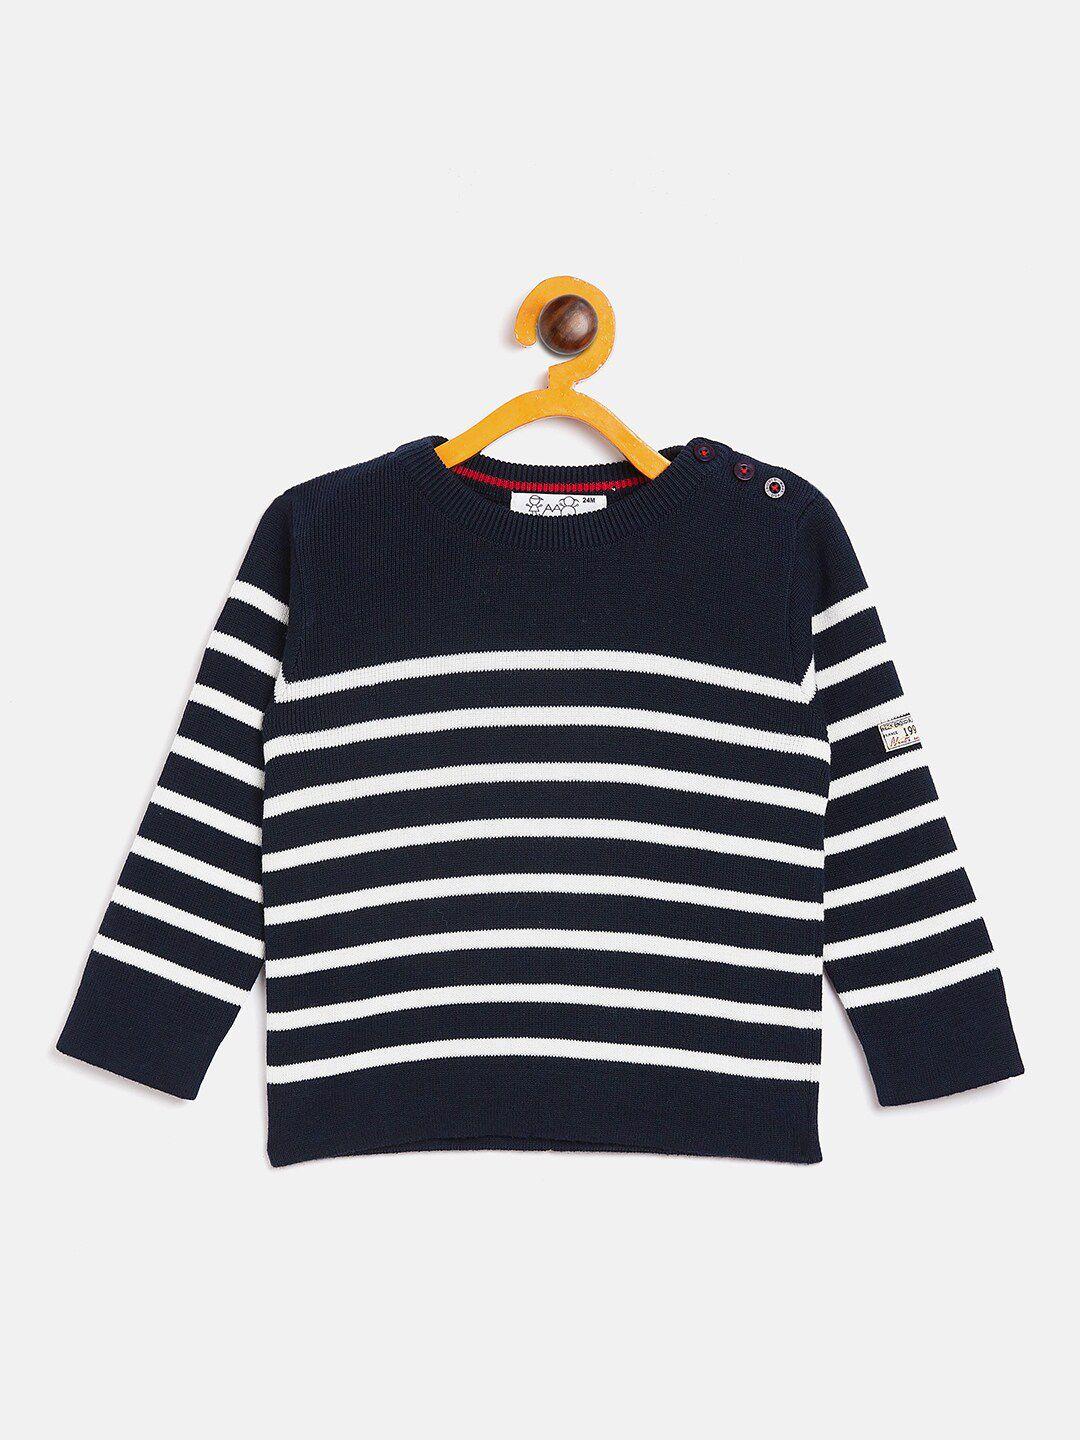 jwaaq unisex kids navy blue & white striped pullover